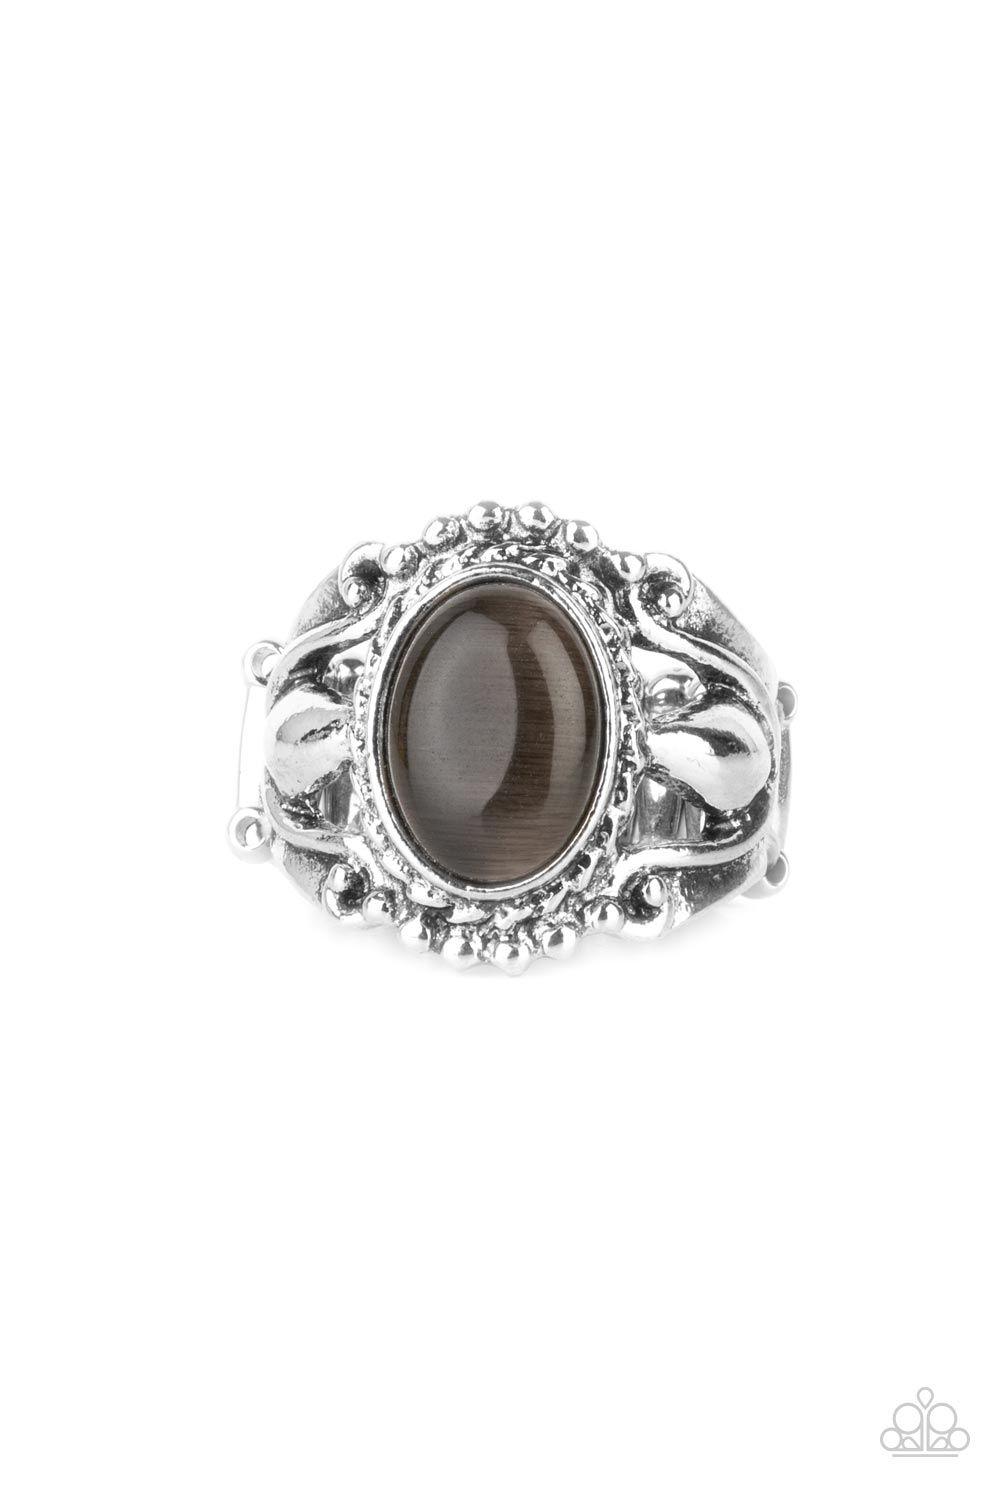 PRE-ORDER - Paparazzi Jubilant Gem - Silver Cat's Eye Stone - Ring - $5 Jewelry with Ashley Swint